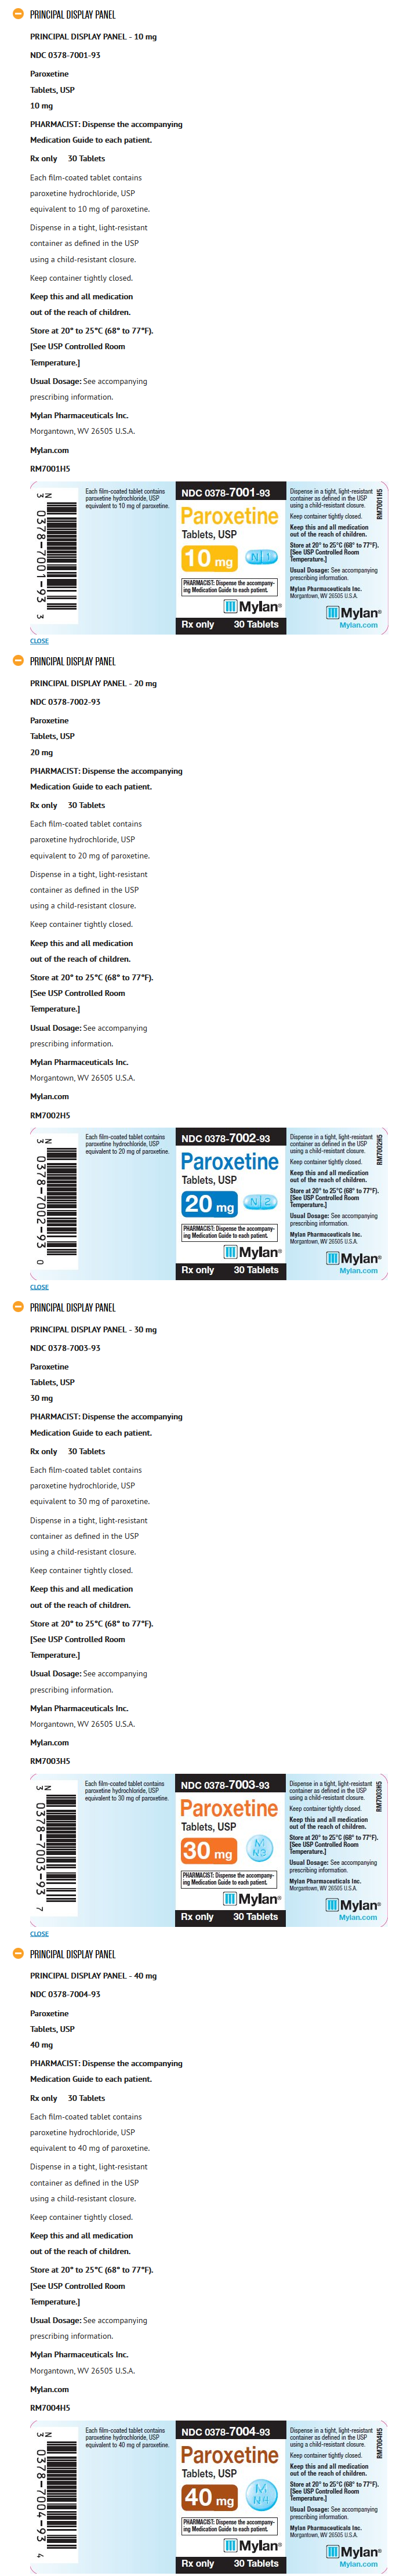 File:Paroxetine pdp.png